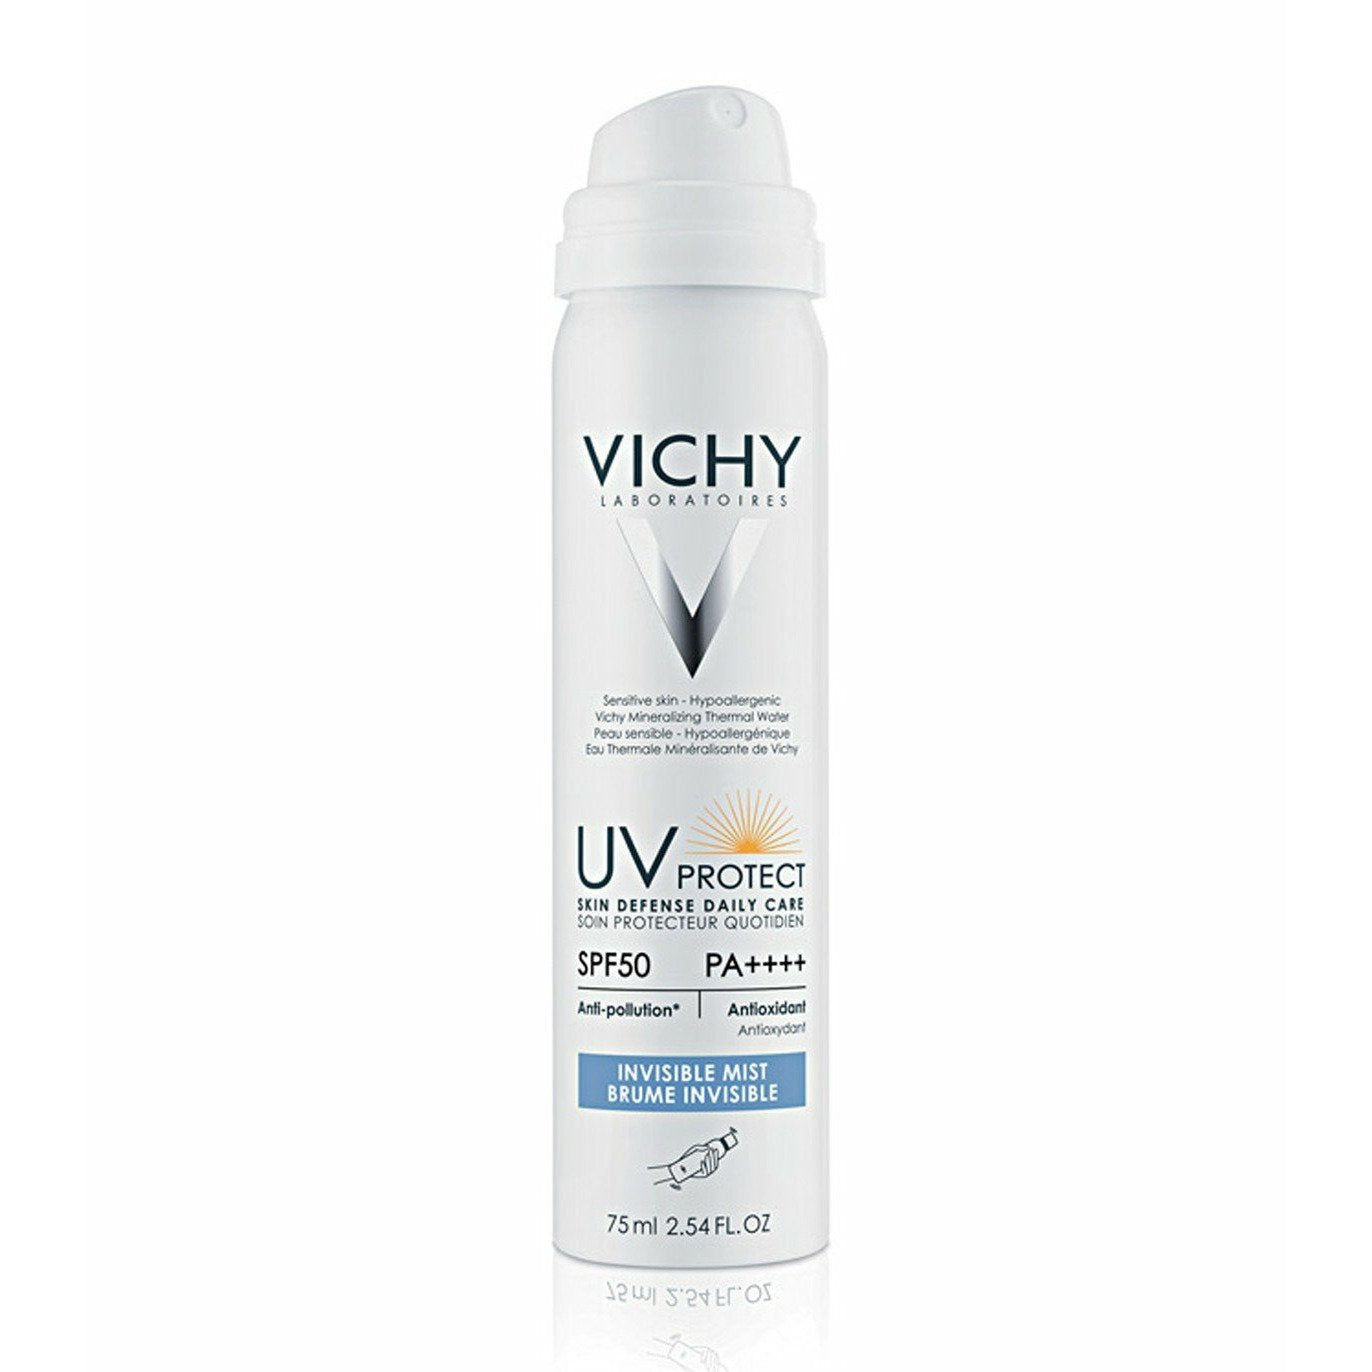 Vichy Uv Protect Brume Invisible spf50 75ML